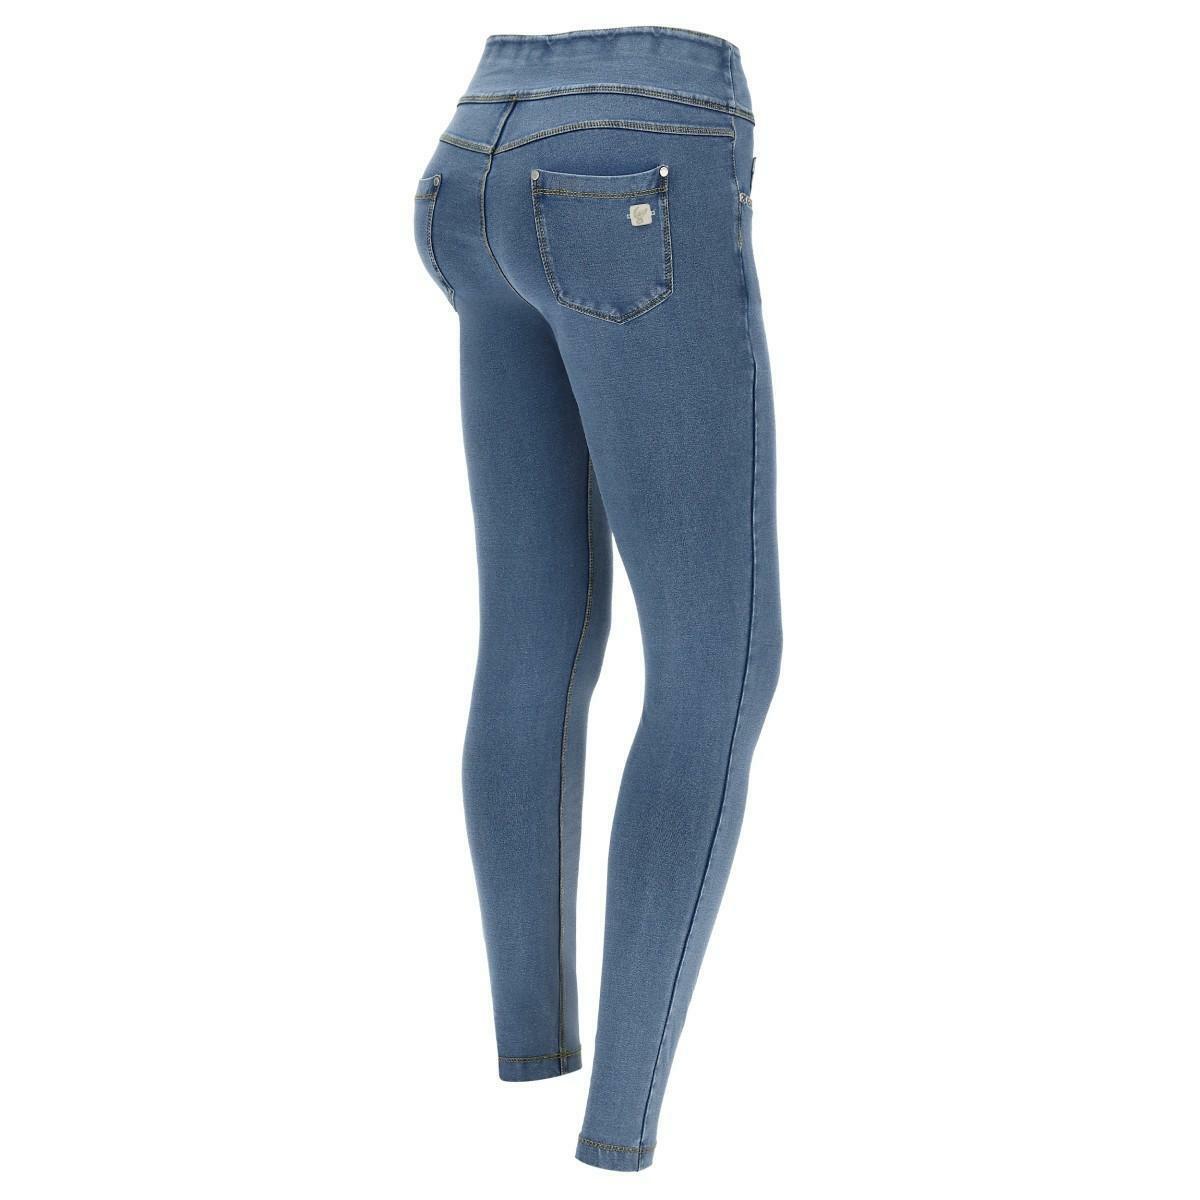 freddy pants freddy nowy1mc002. da donna, colore jeans